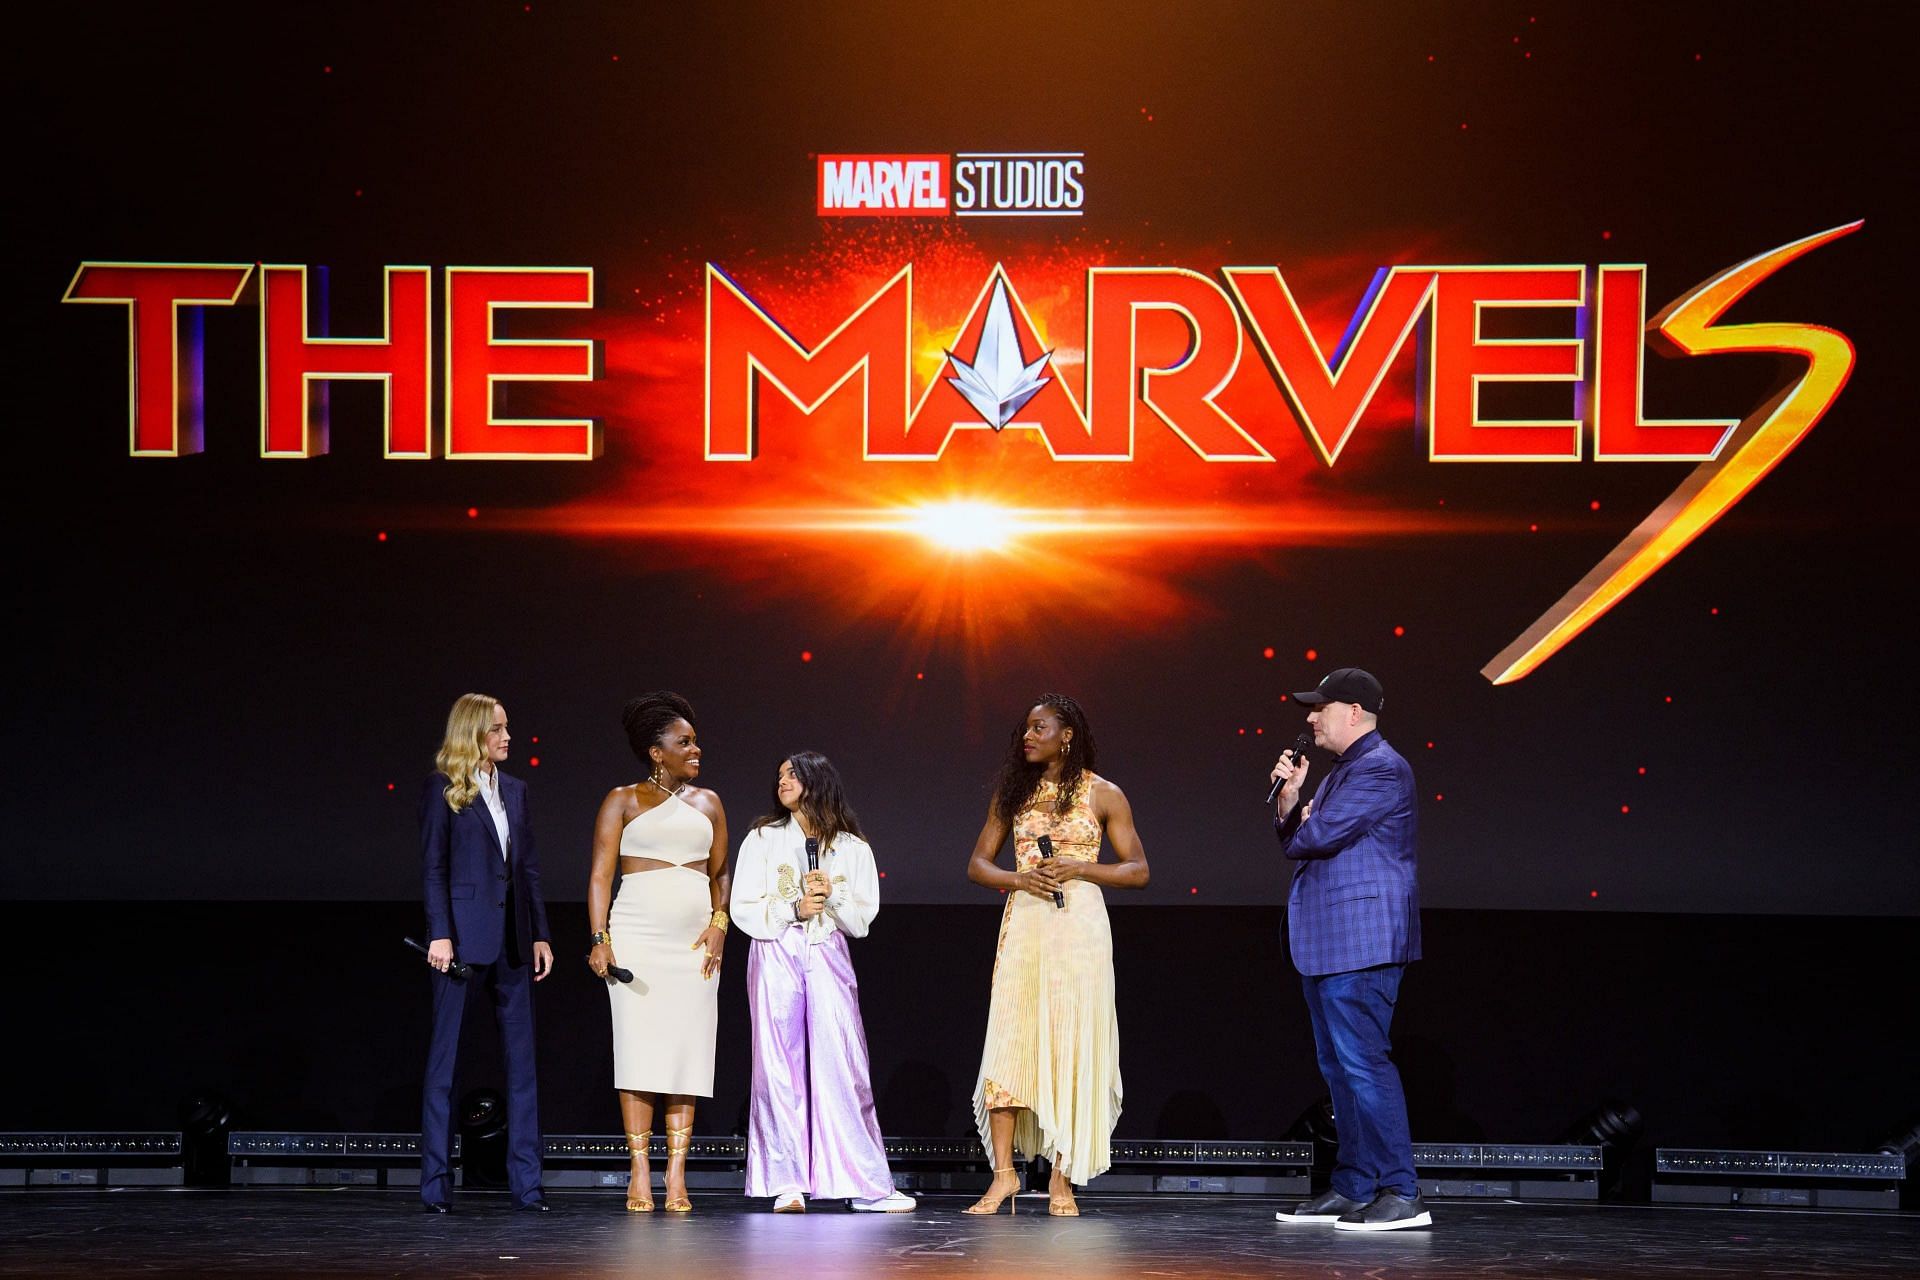 The Marvels cast and crew (Image via Disney)